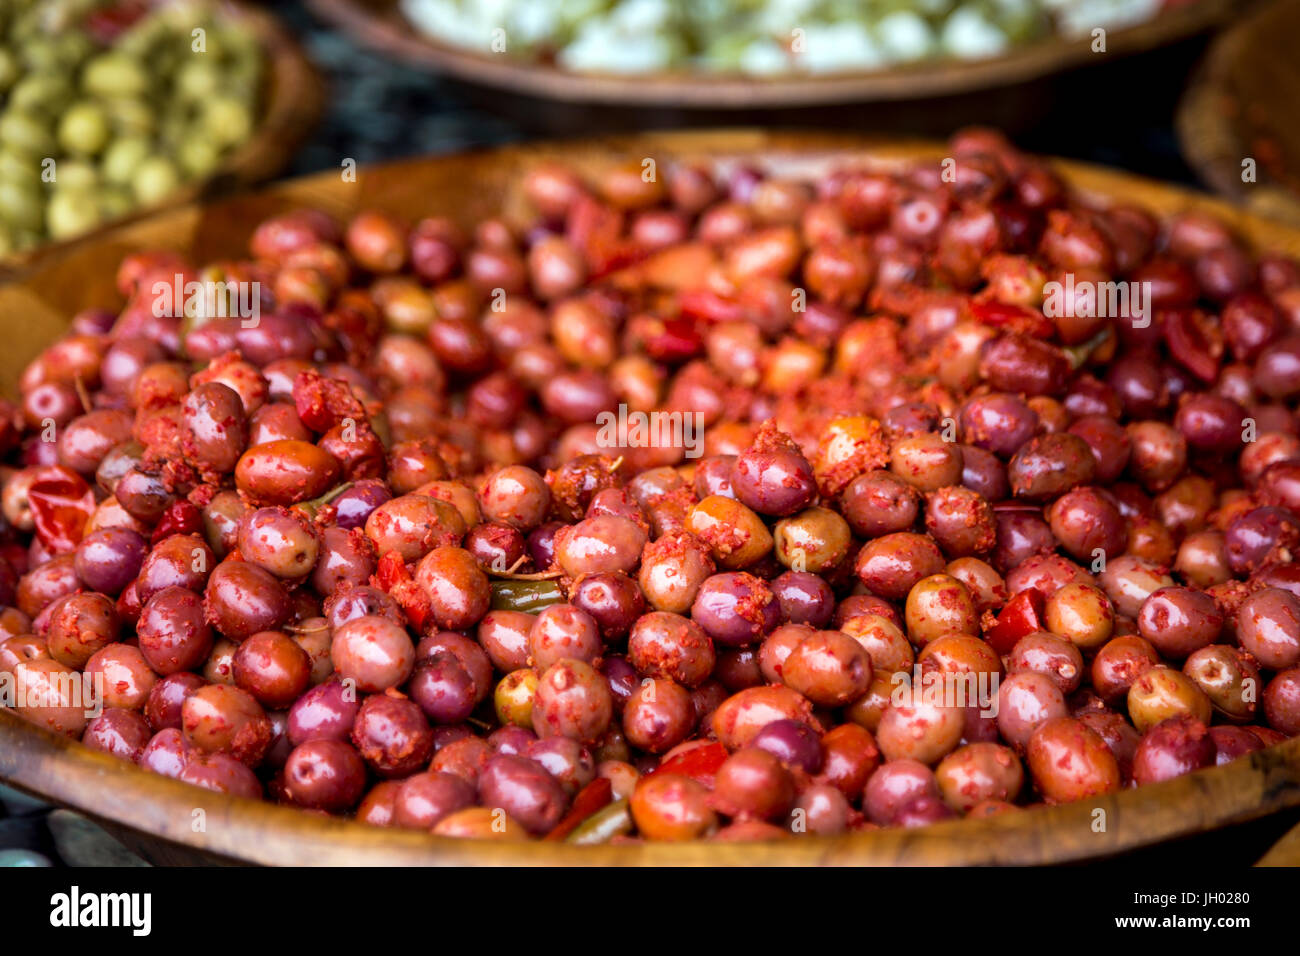 Red olives on a large wooden plate at Marché de Wazemmes (Wazemmes Market), Lille, France Stock Photo